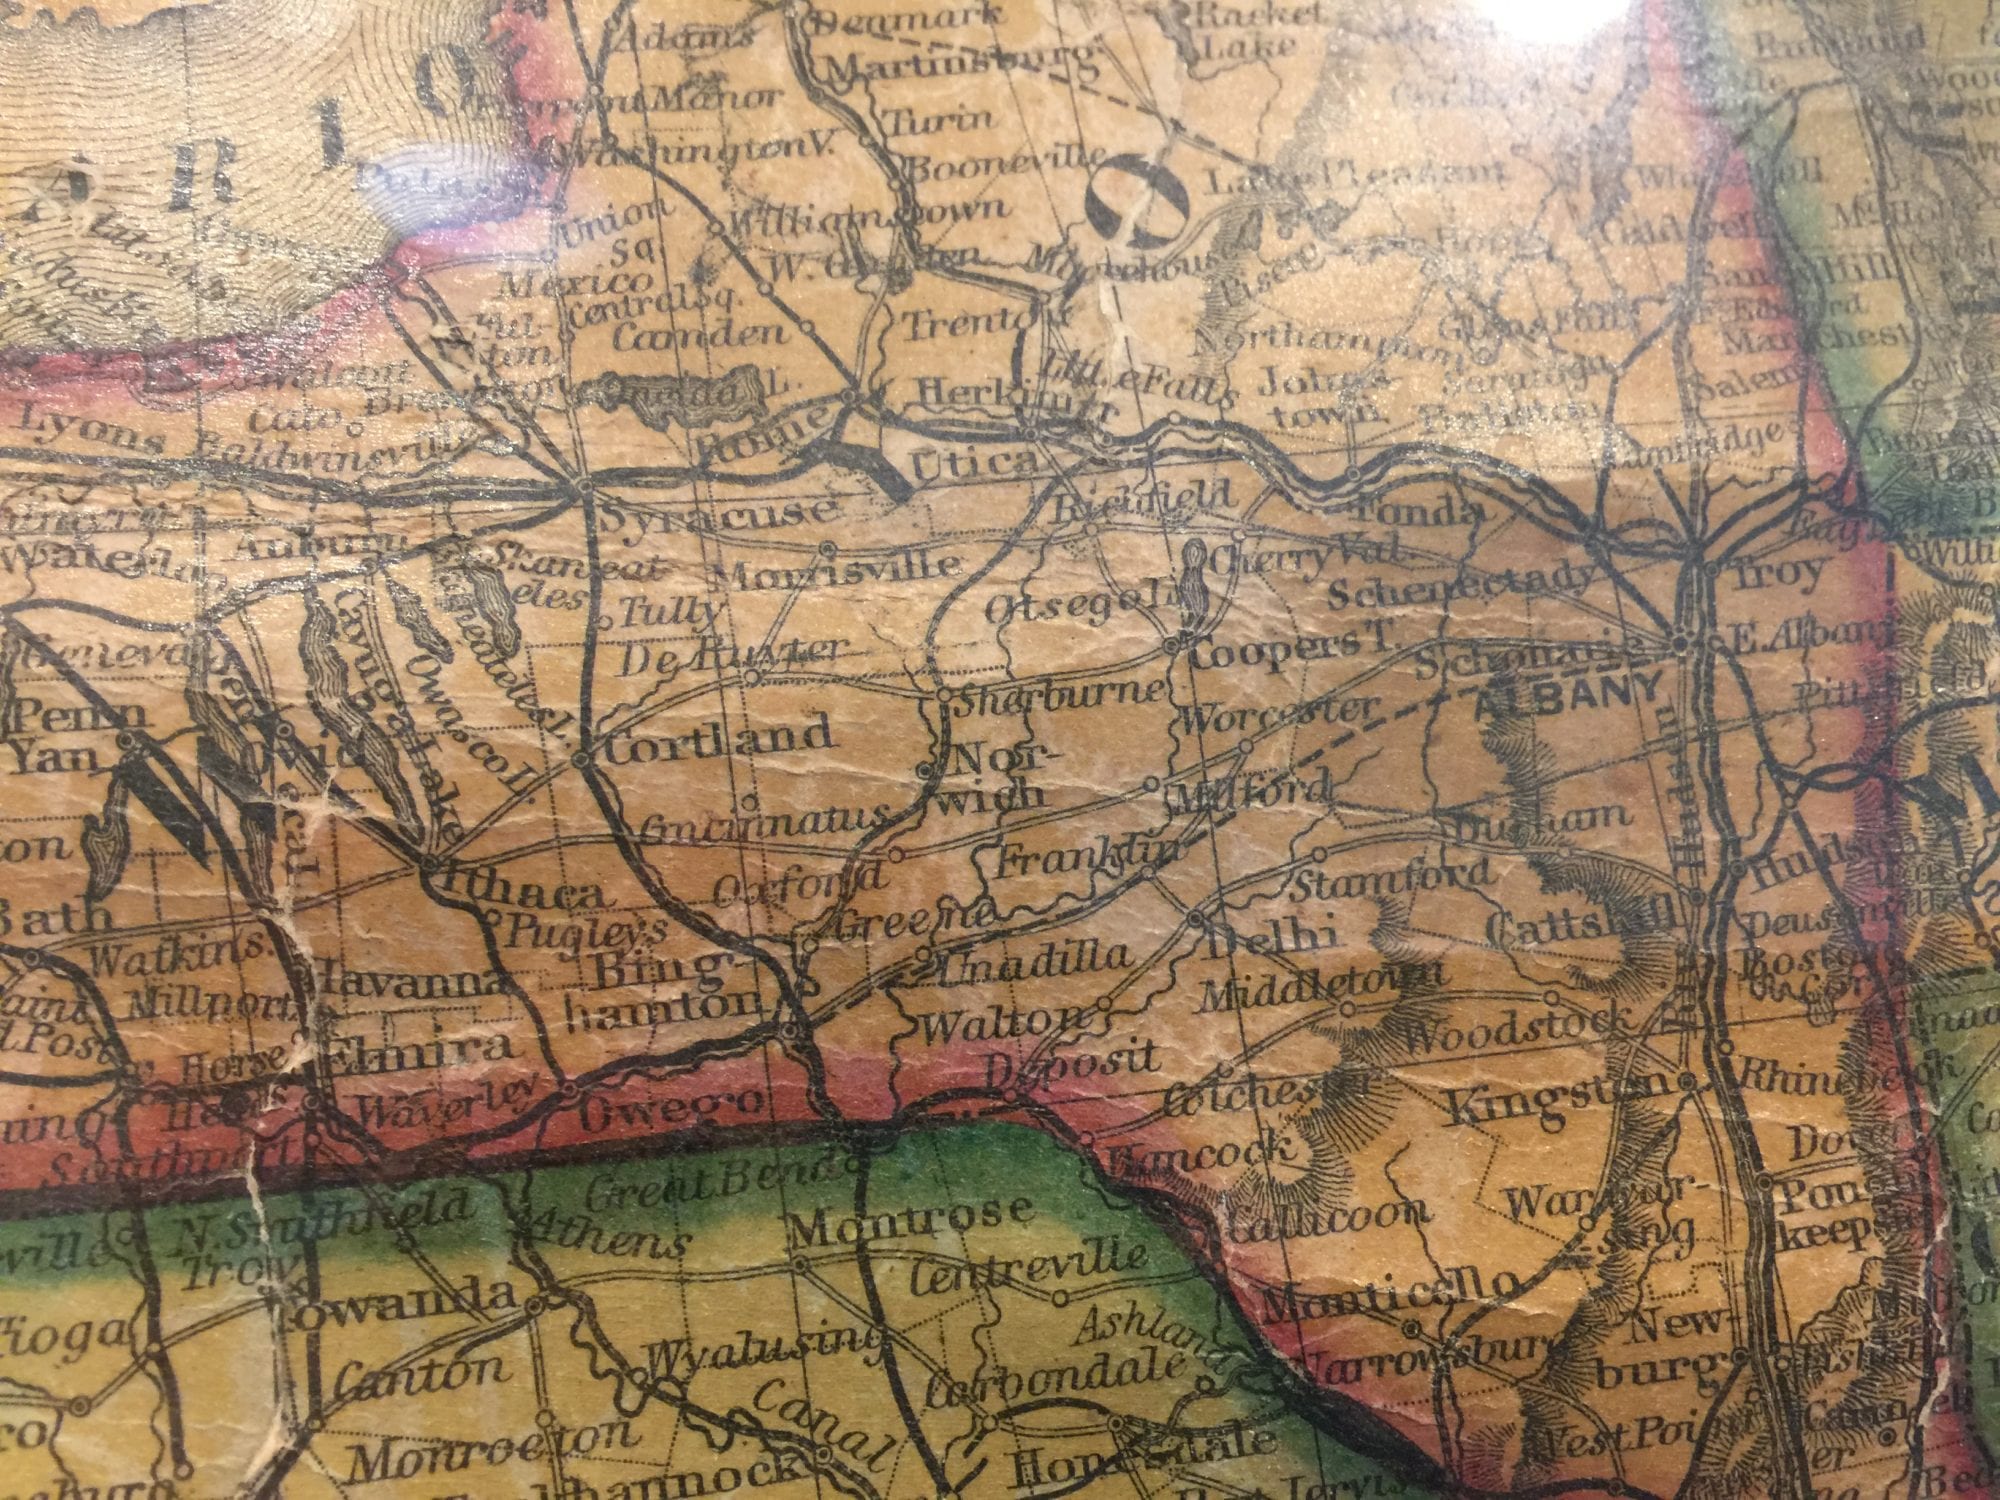 A piece of history: Professor Garnar donates pre-Civil War map to SUNY Broome